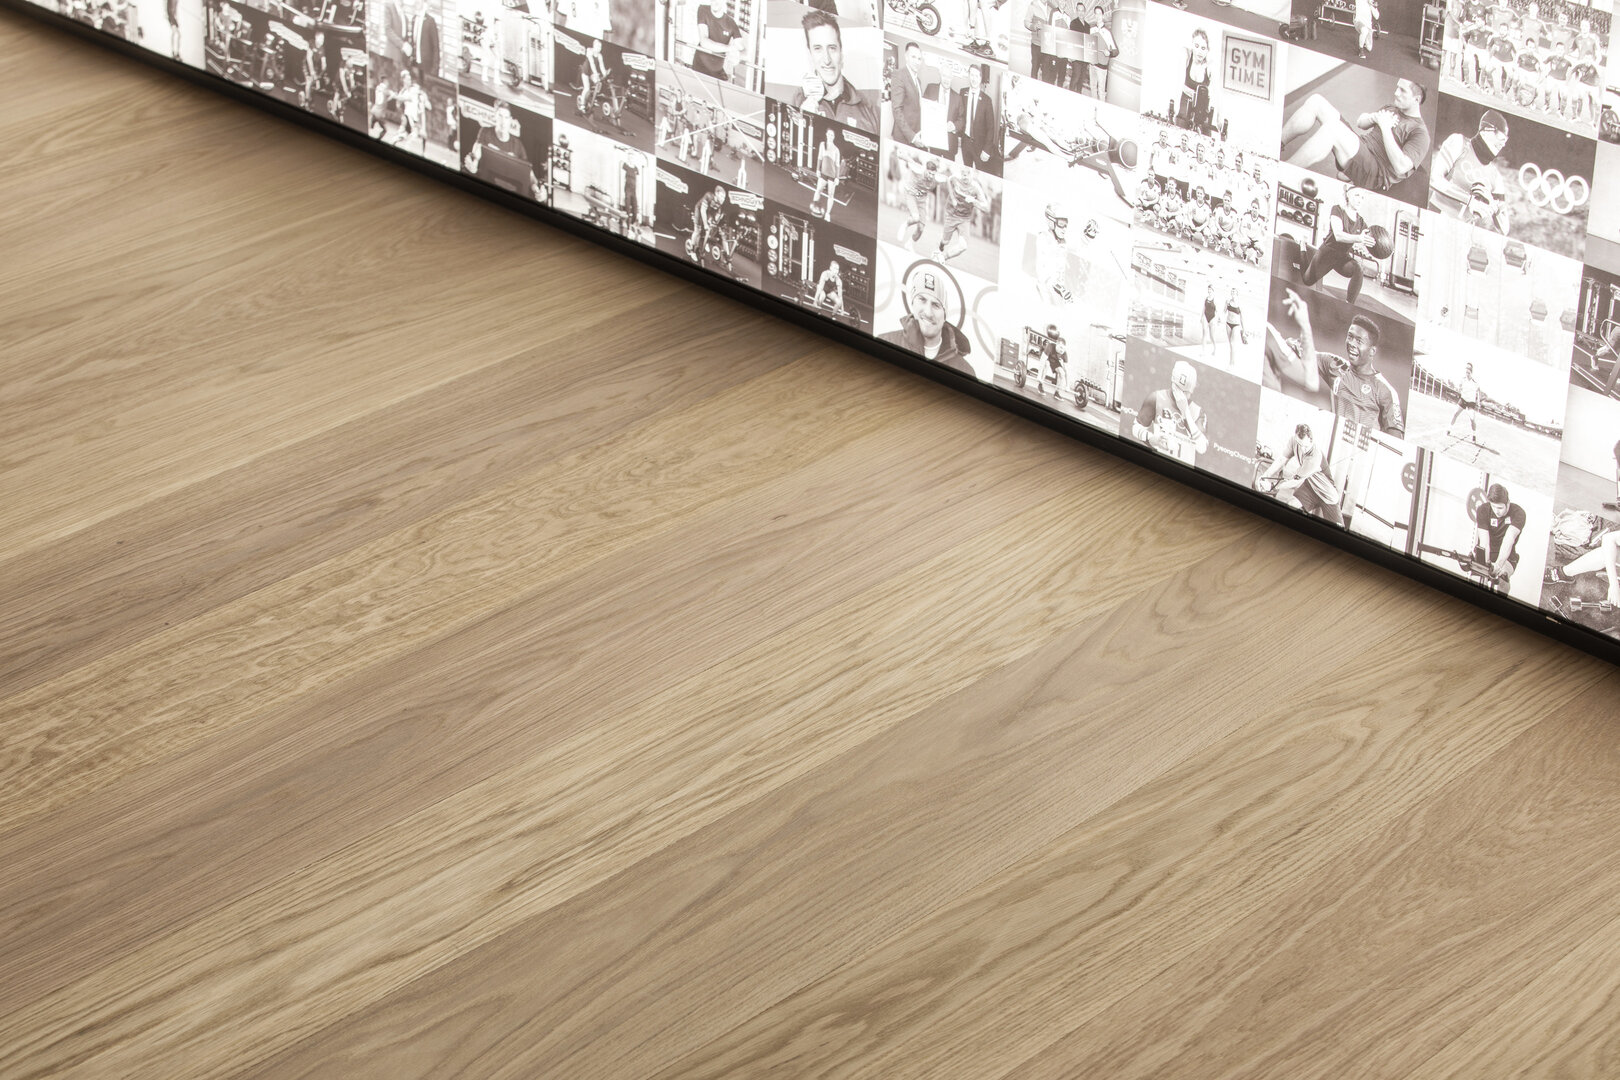 TRAPA Plank floor - mixed width
Oak placid brushed Carezza